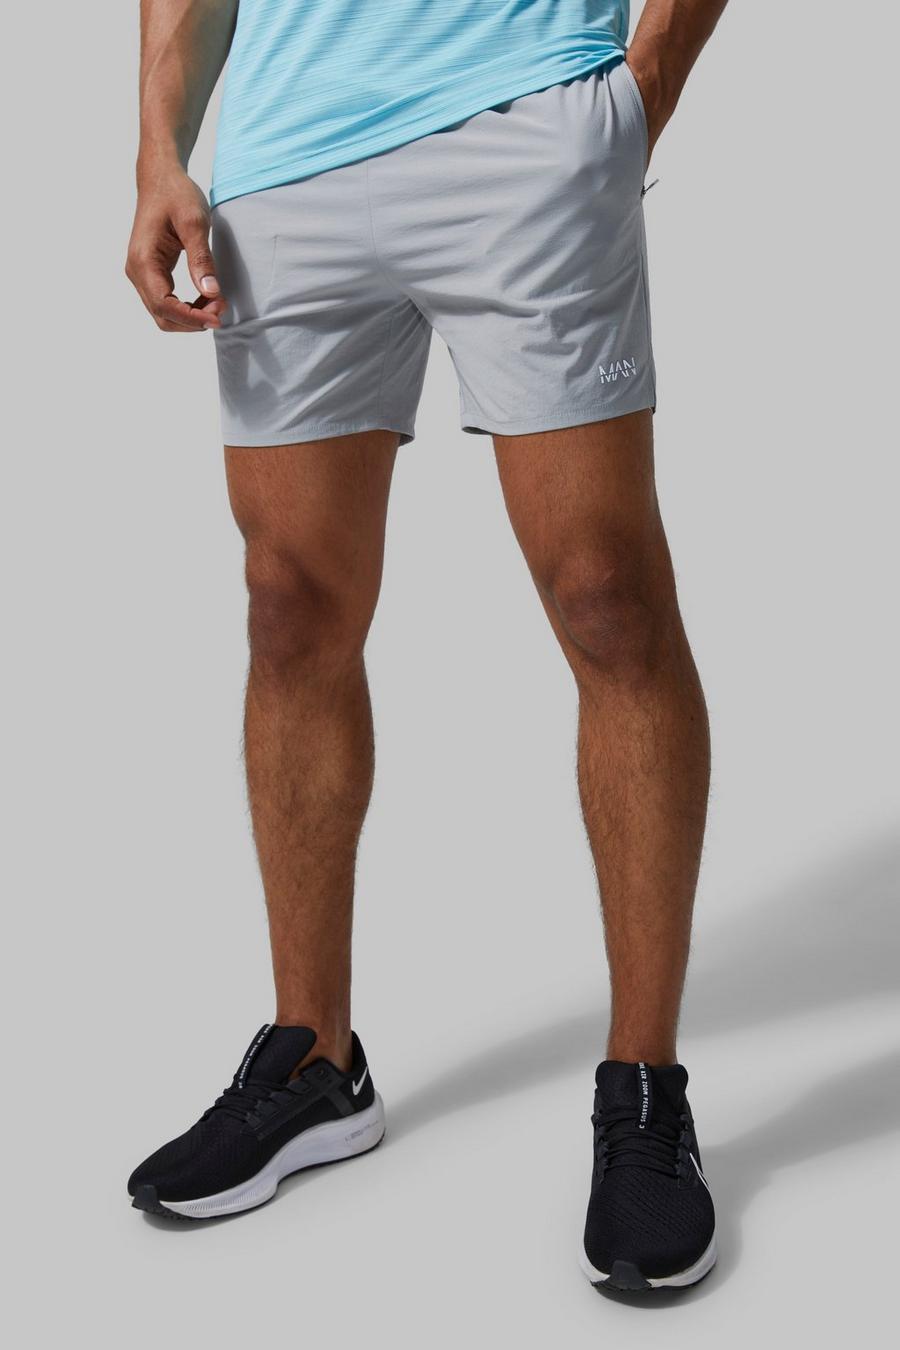 Man Active Lightweight Performance Shorts, Light grey